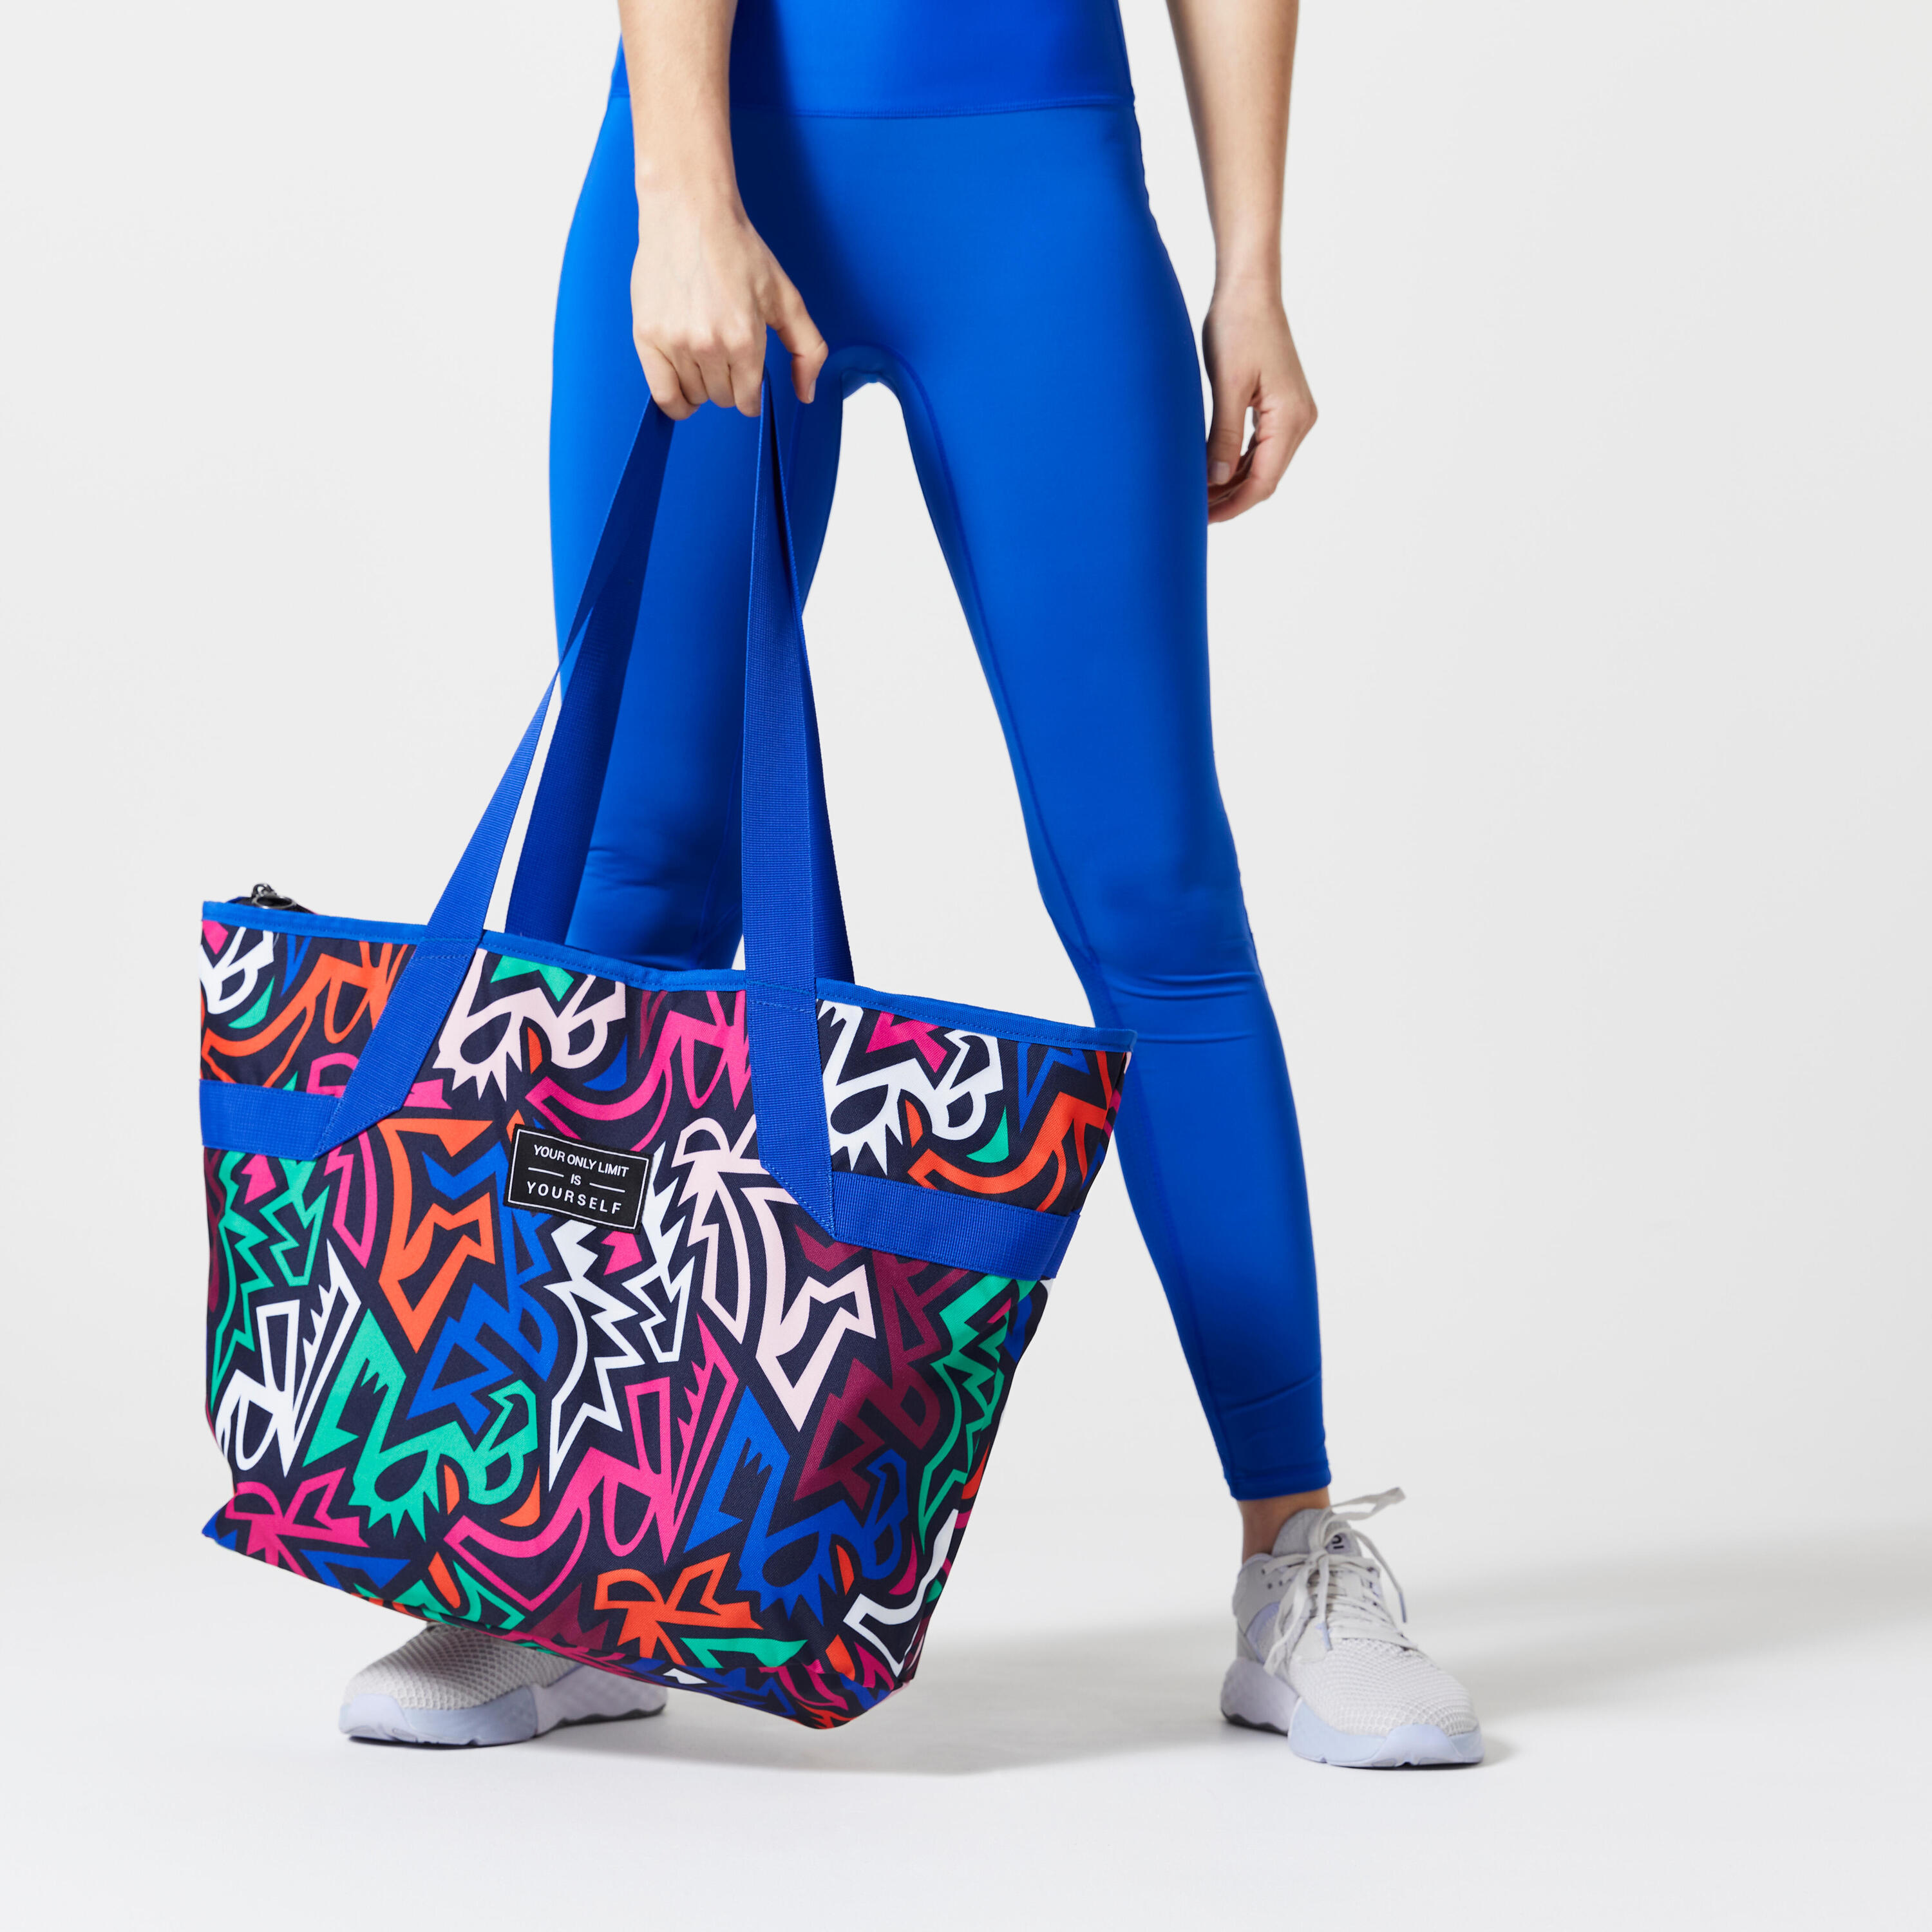 25 L Fitness Tote Bag - Multicoloured Print 6/9